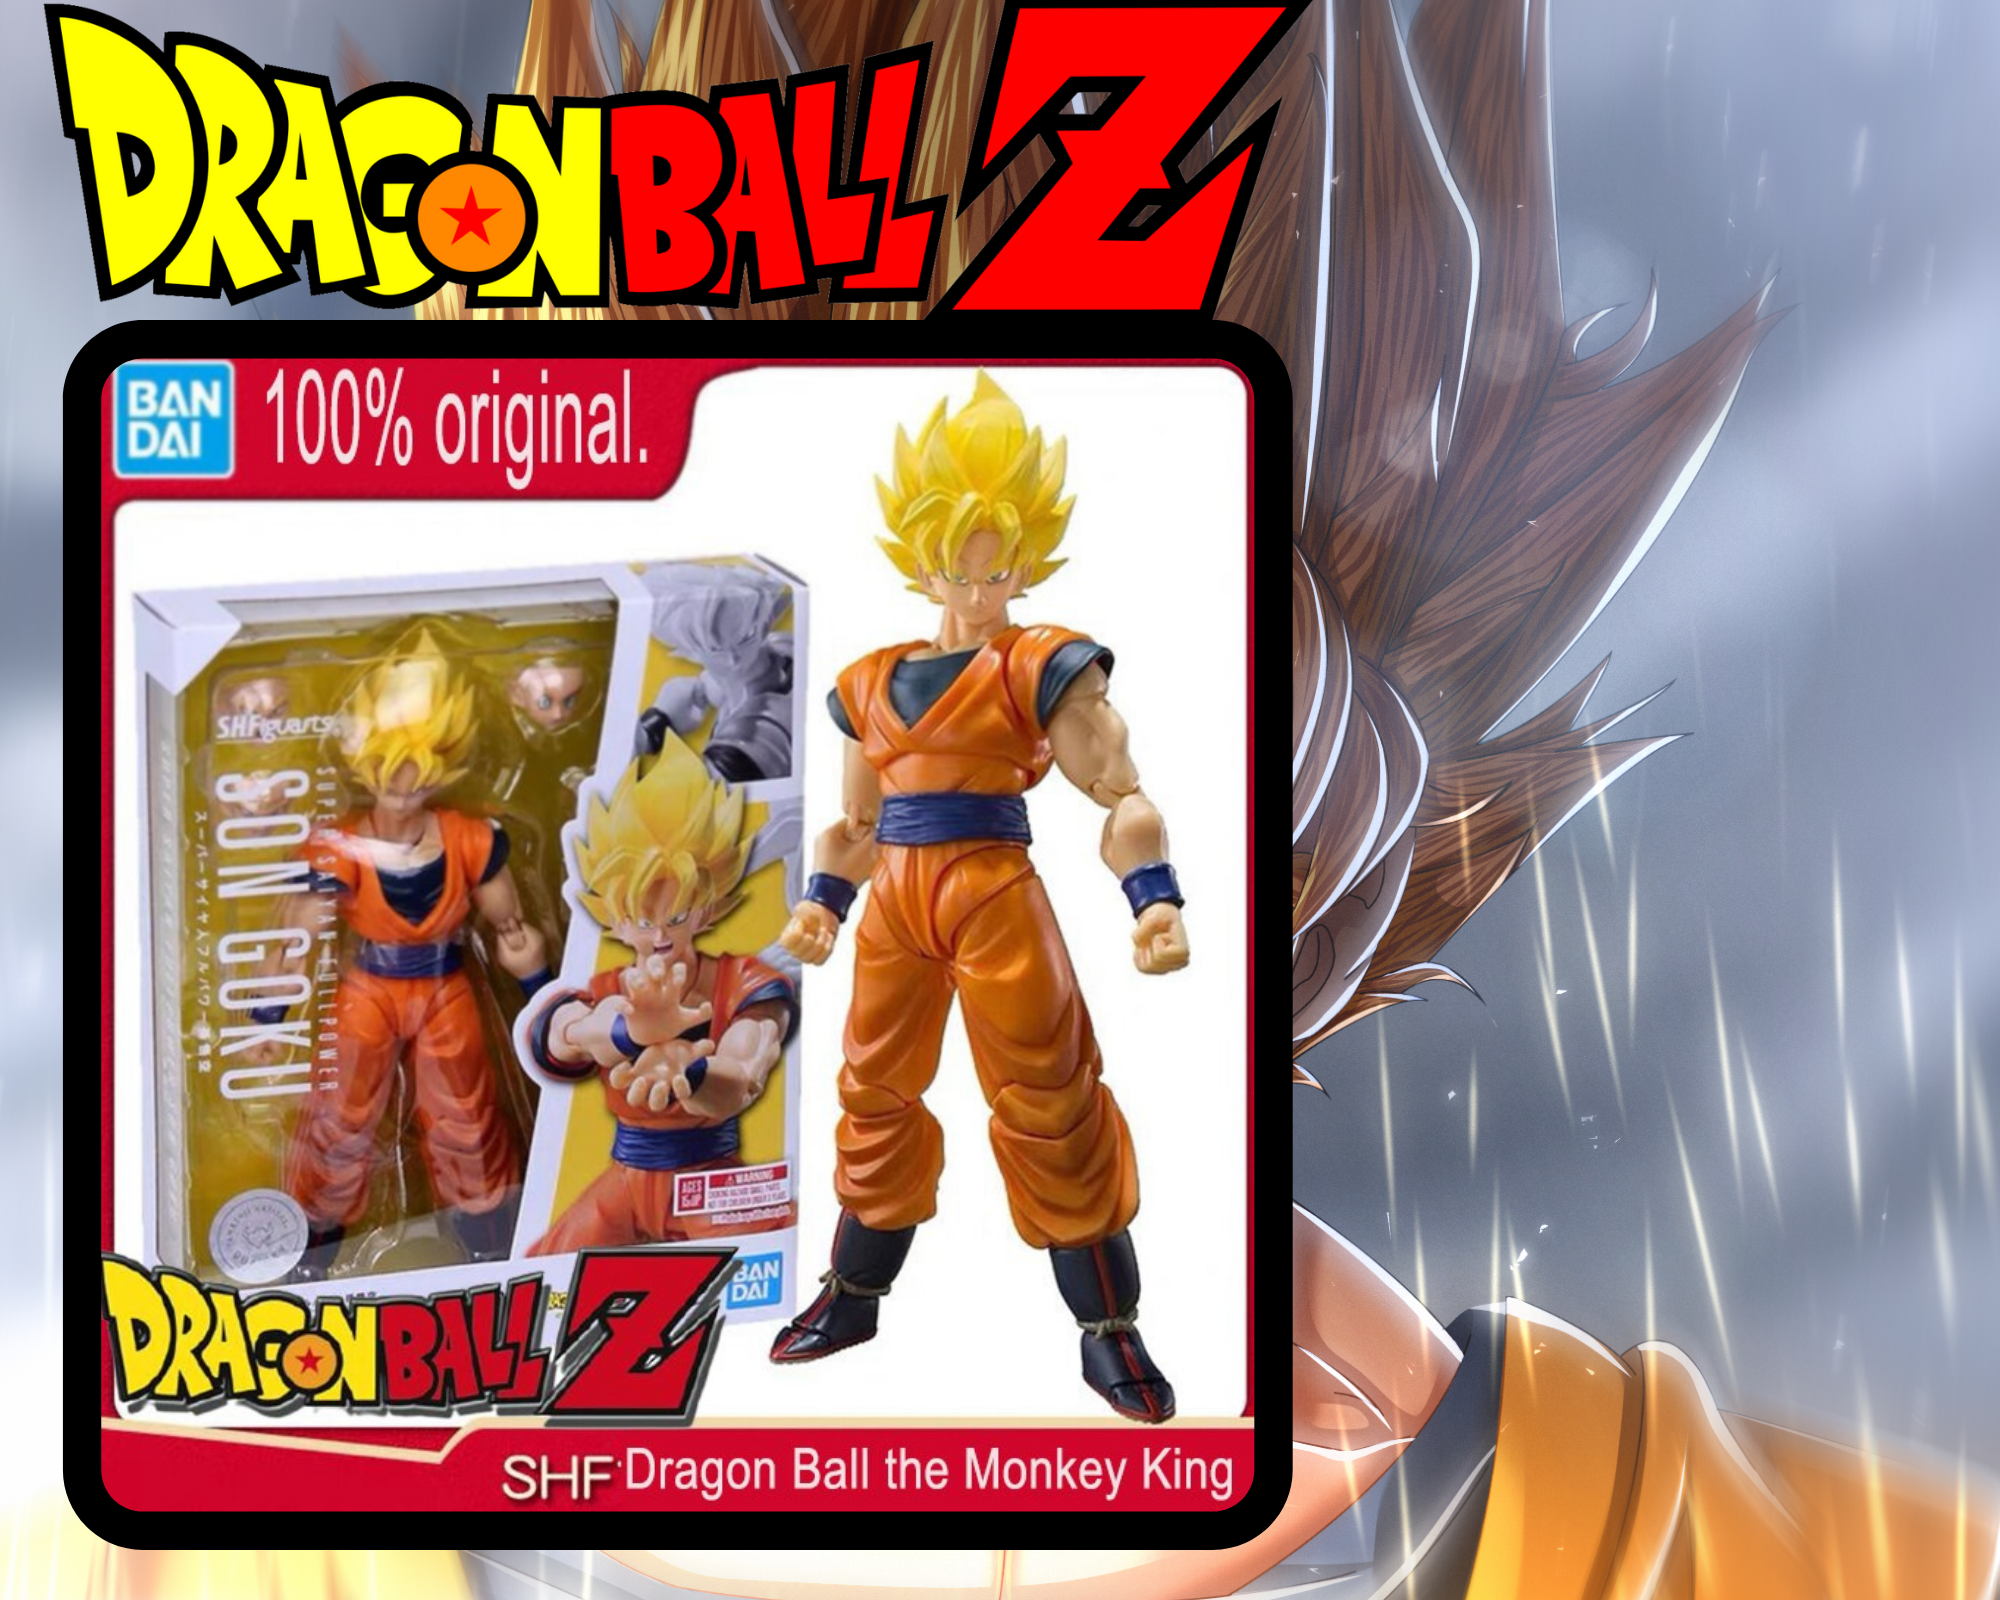 Figurine SH Figuarts Son Goku Super Saiyan Full Power